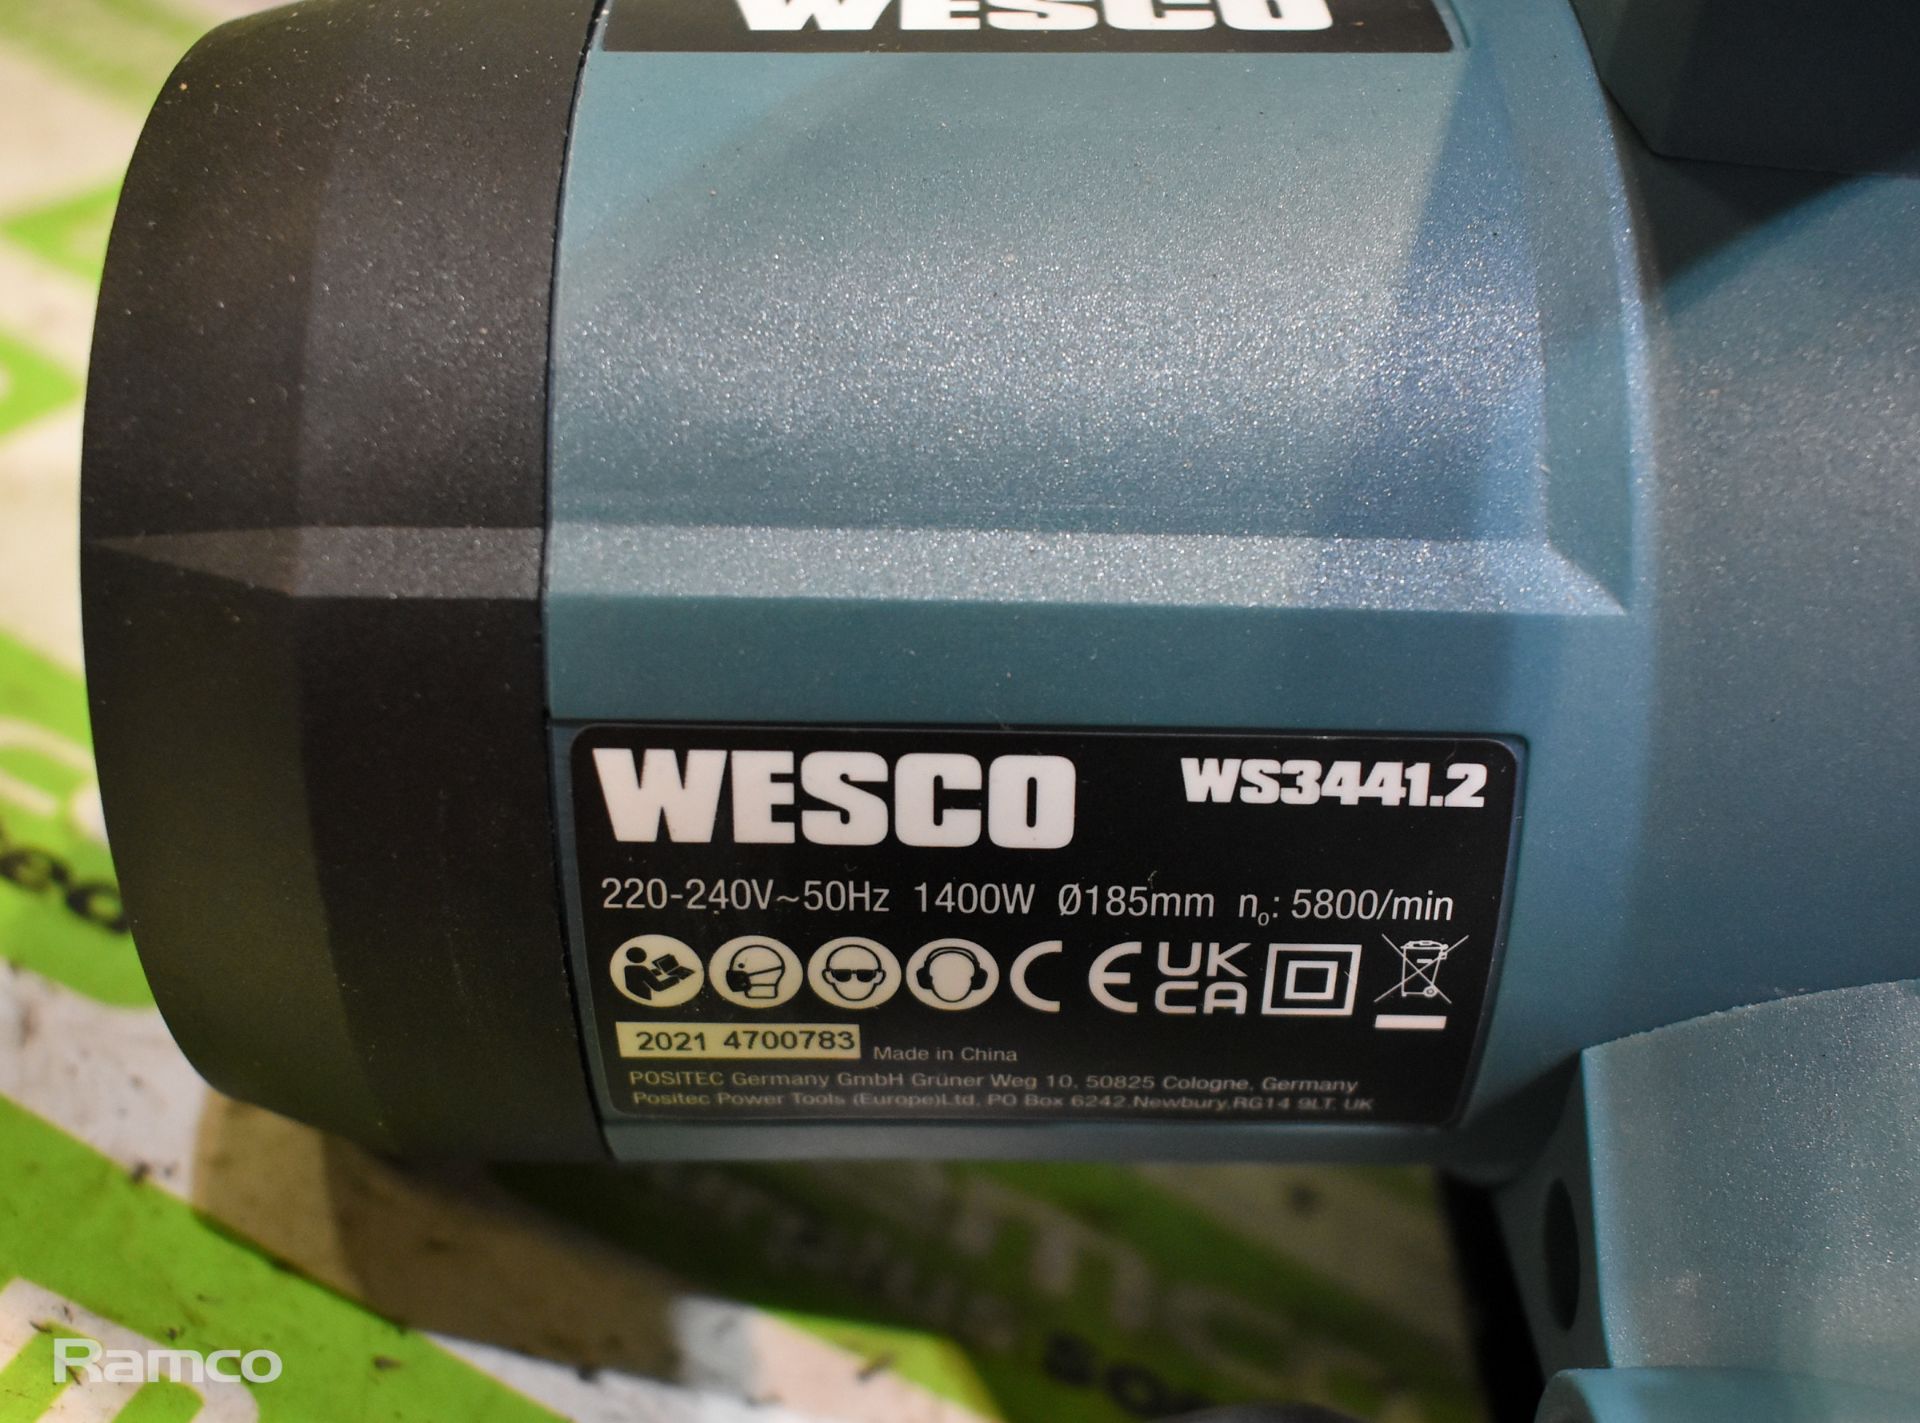 Powercraft bench table saw, Wesco 240V circular saw - Image 5 of 14